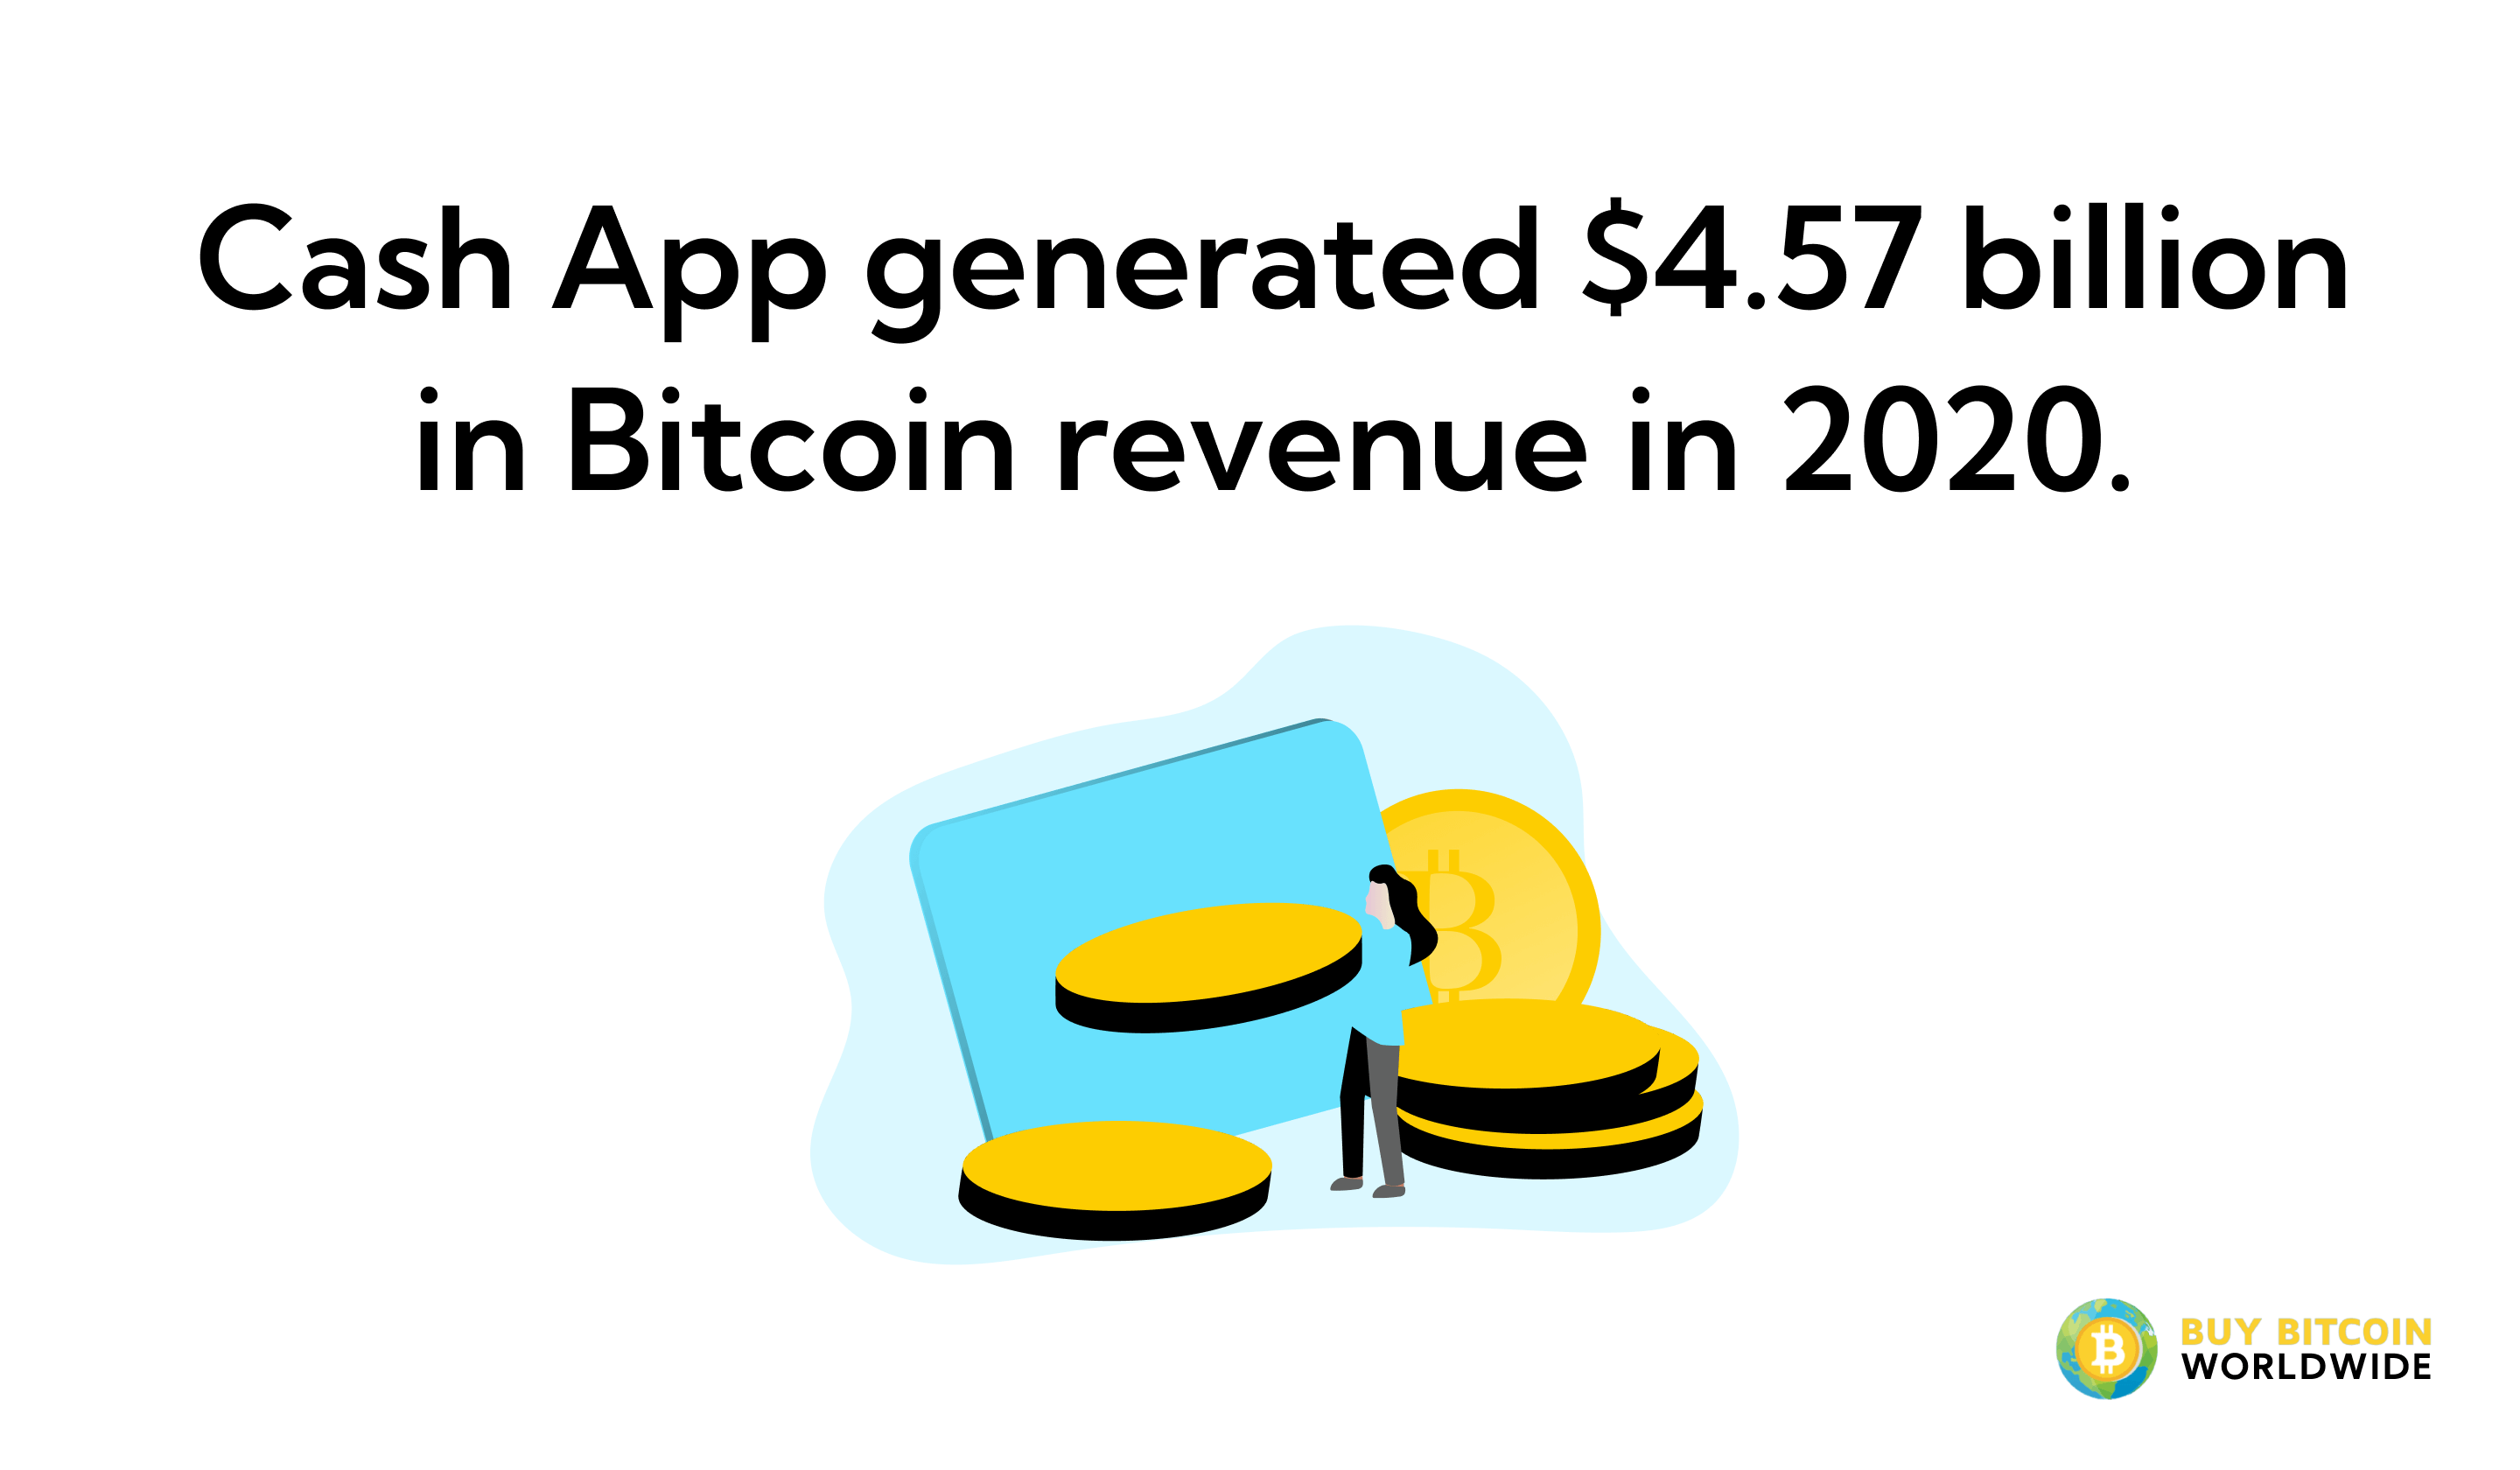 cash app revenue from Bitcoin